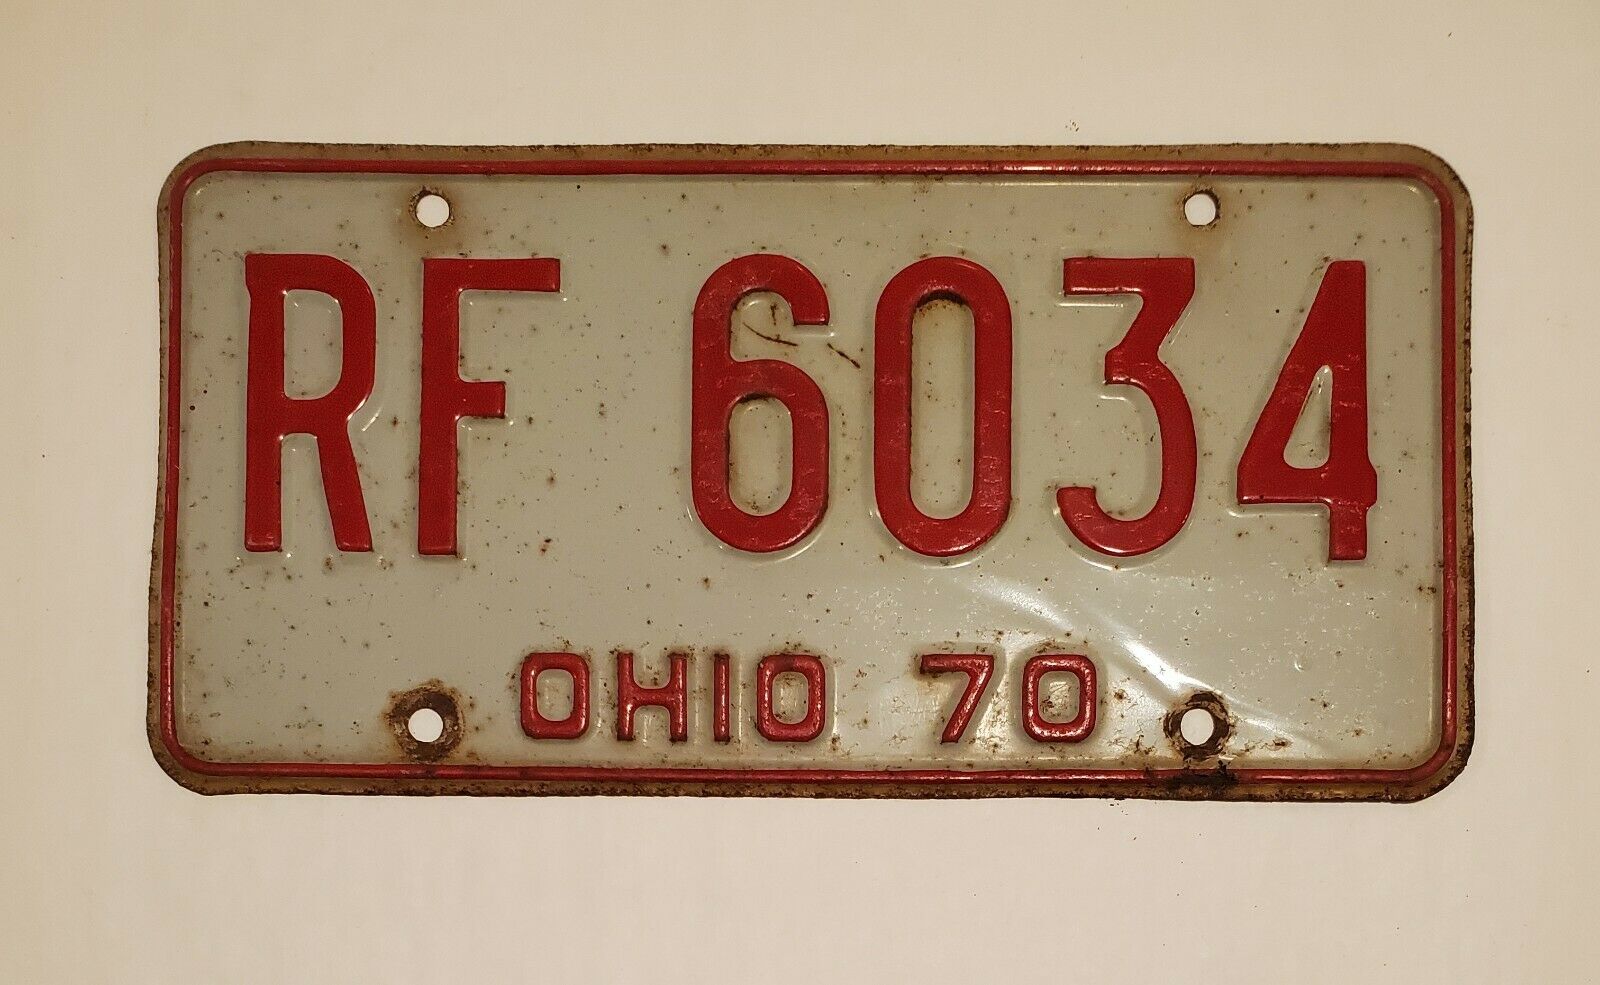 1970 Ohio License Plate Rf 6034